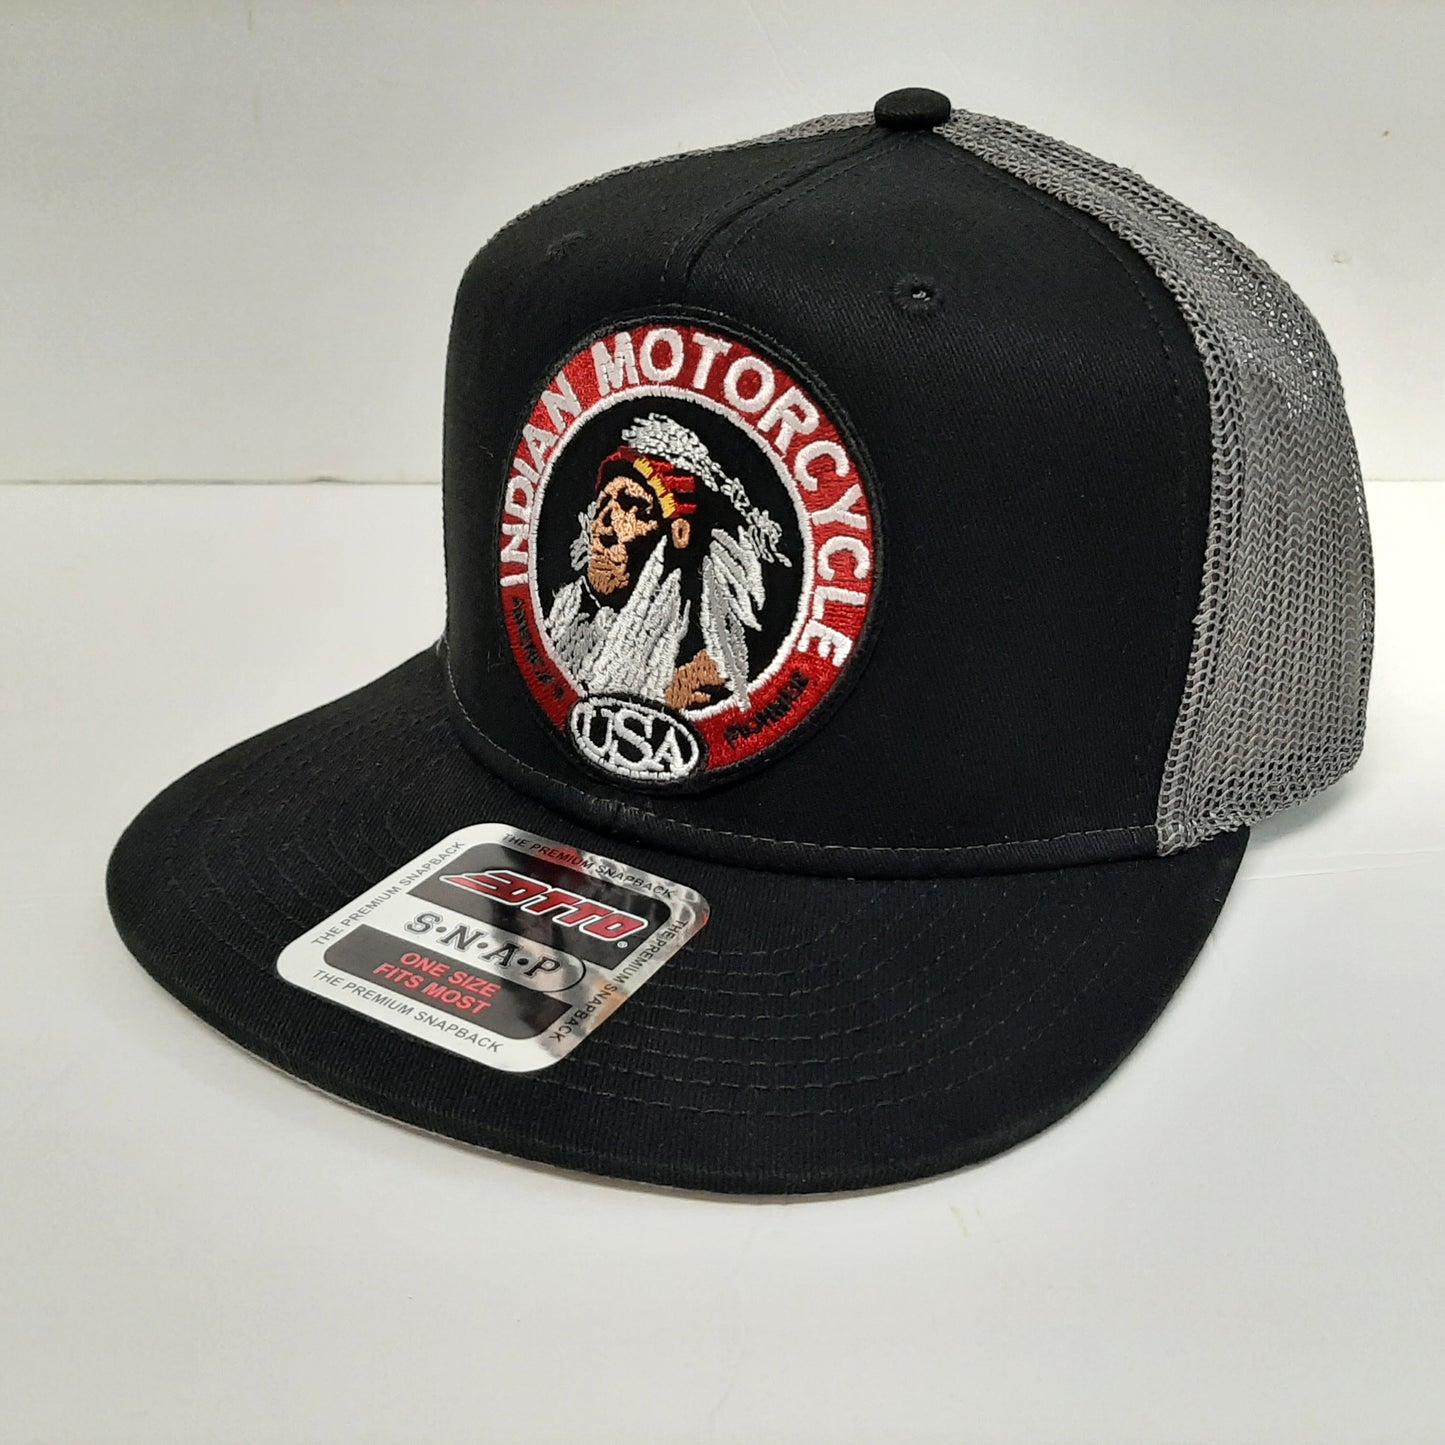 Otto Snapback Trucker Indian Motorcycles Patch Baseball Cap Hat Black Flat Bill